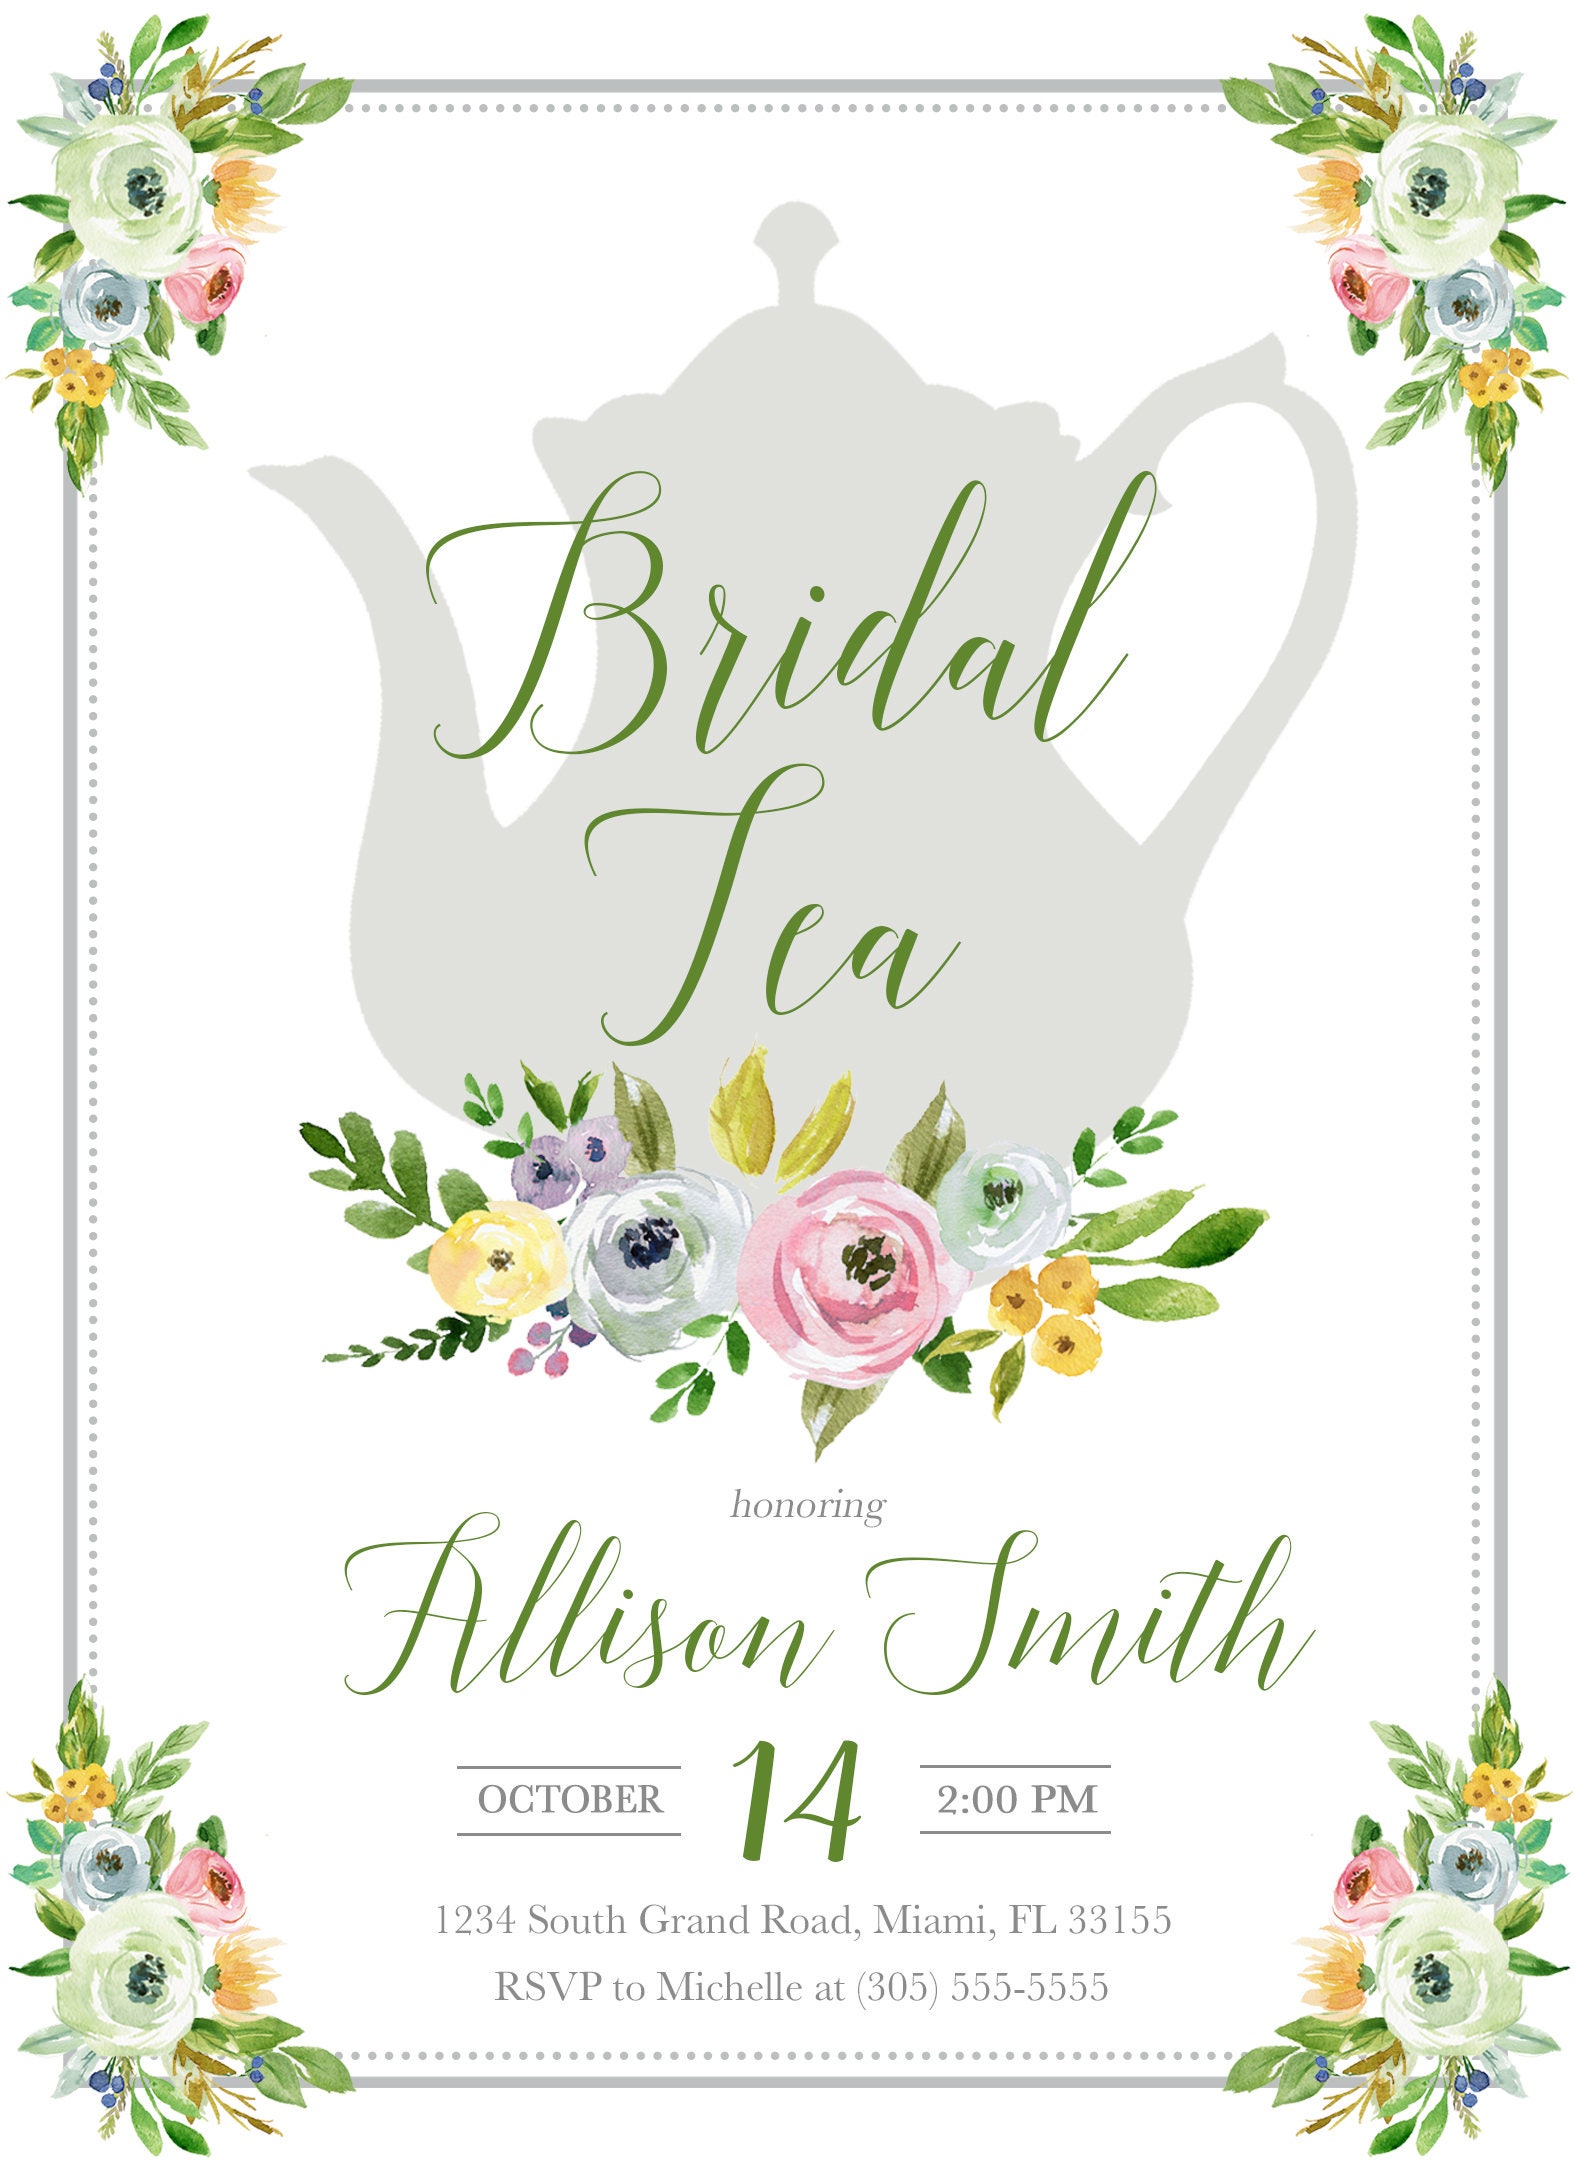 Bridal Shower Tea Invitations - Mryn Ism